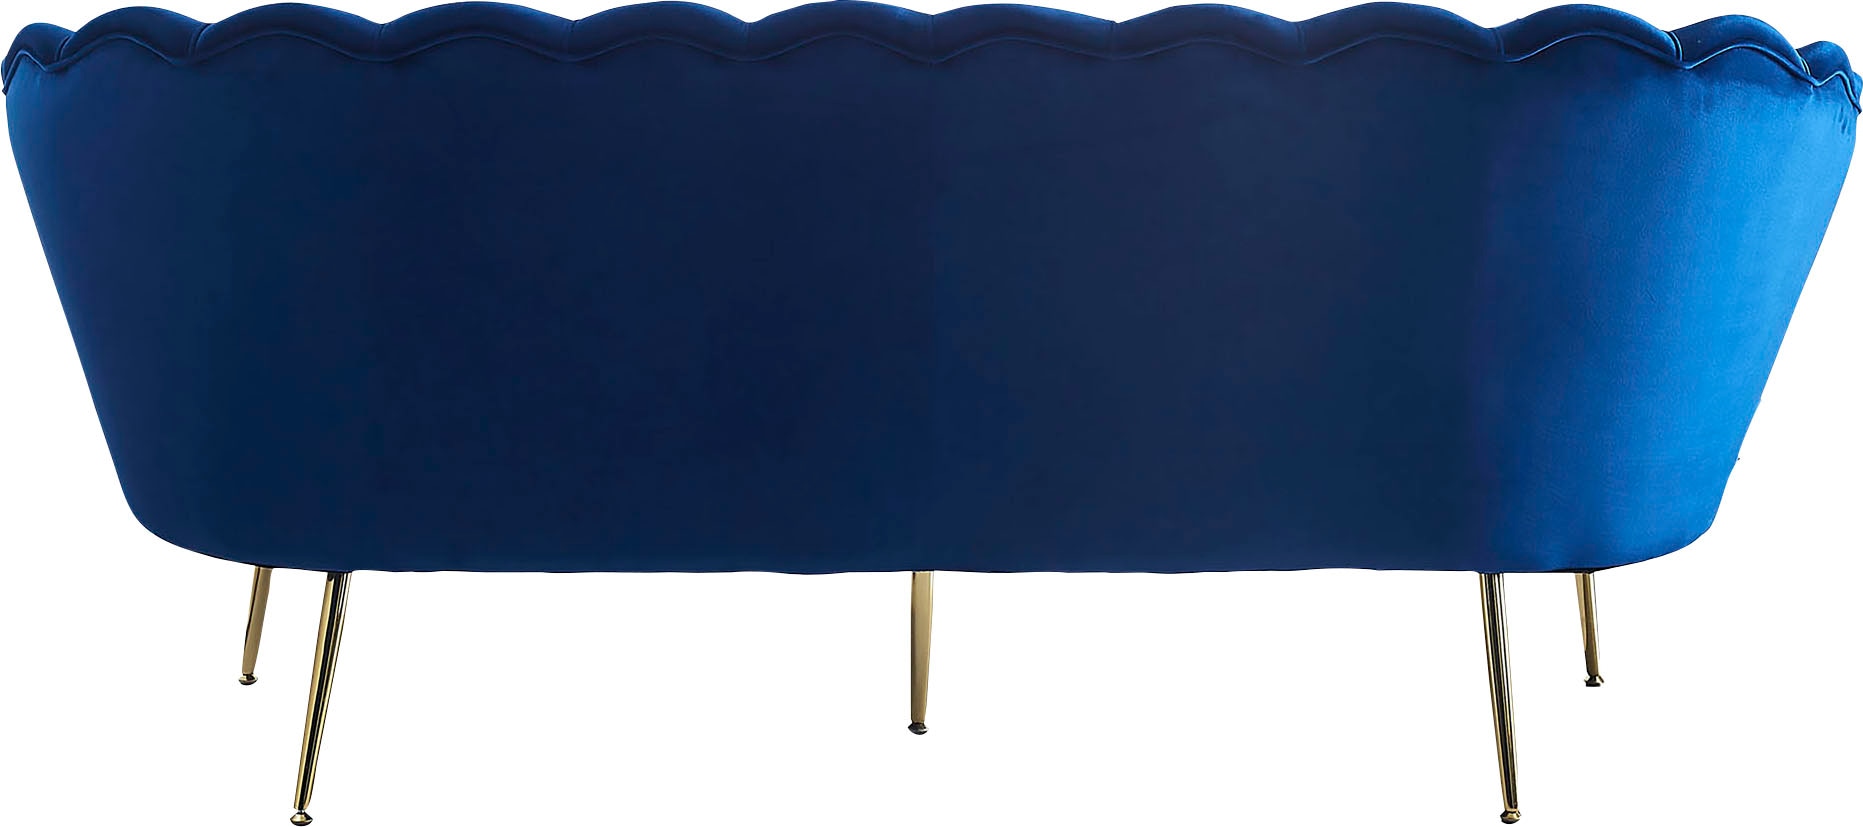 SalesFever 3-Sitzer »Clam«, extravagantes Muscheldesign, Breite 180 cm